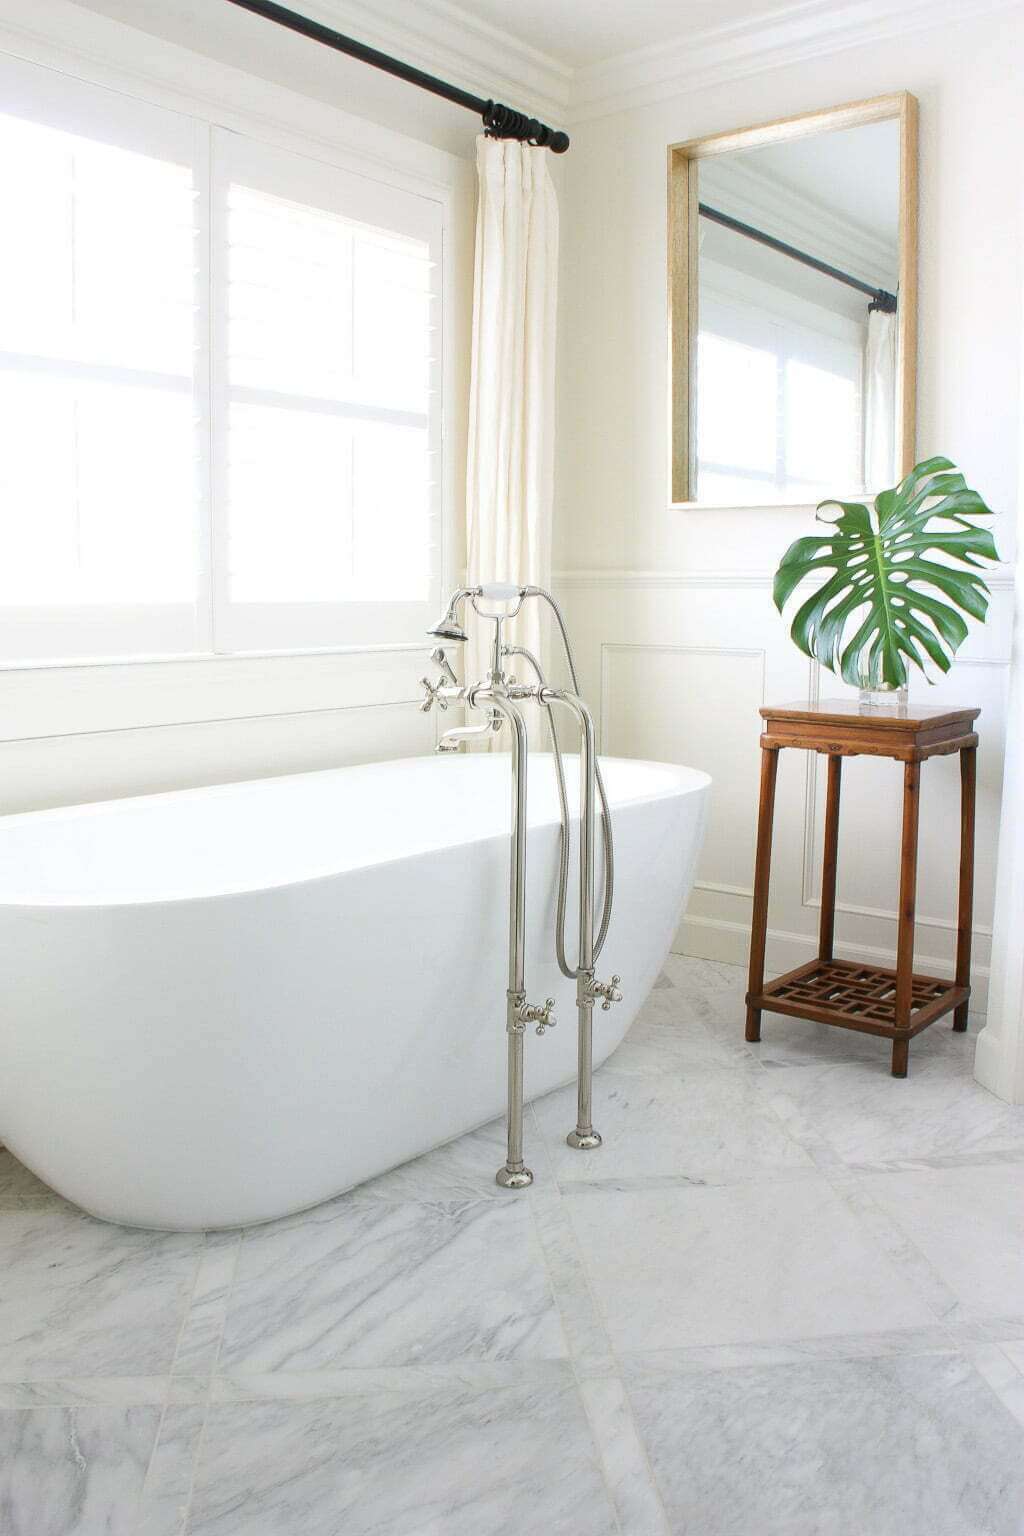 freestanding tub in bathroom with marble floor tiles